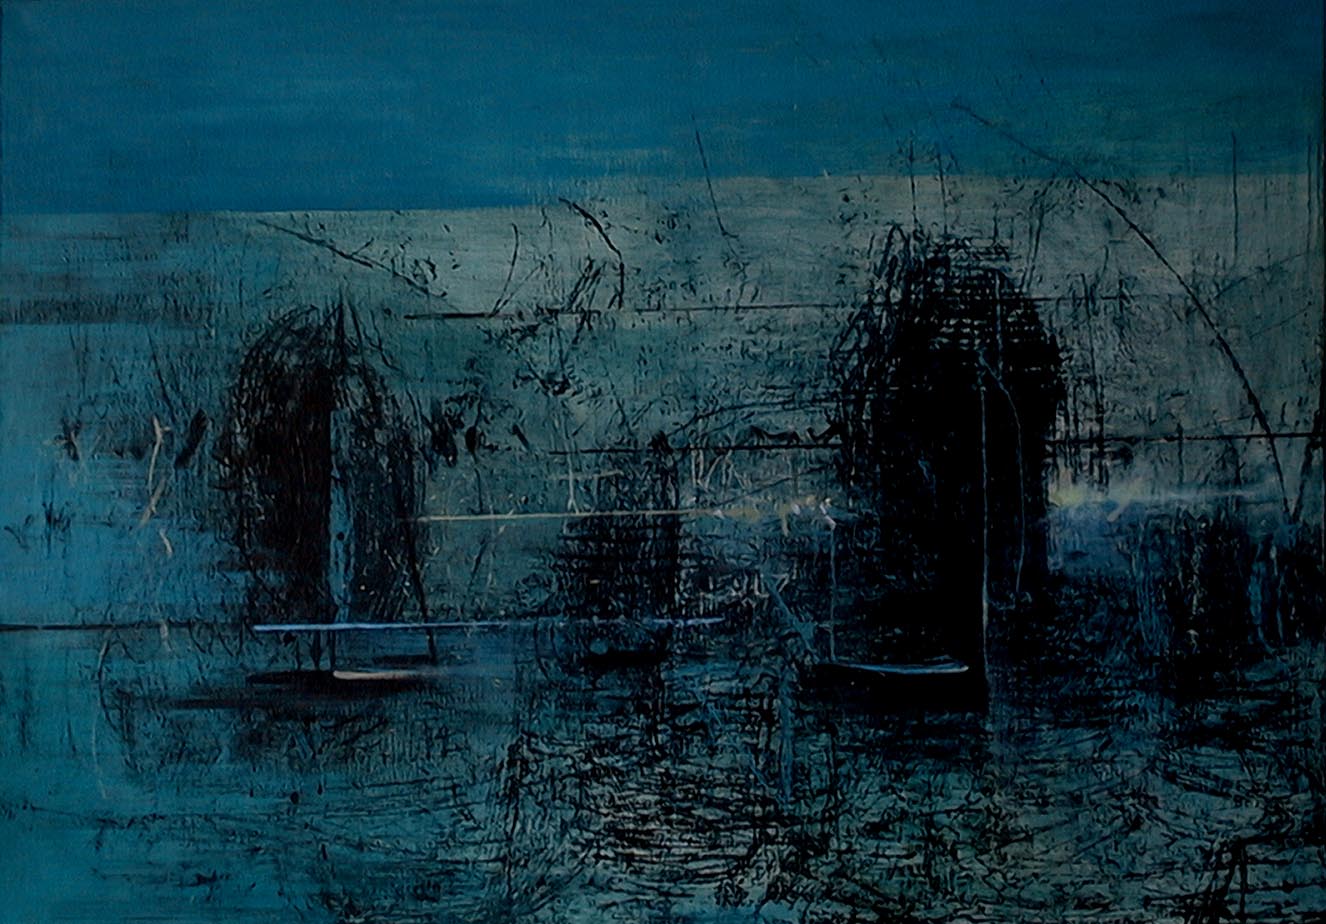 Mendrek Pawel 
"Life of the Horizon 16 Uhr 45", 2002
acrílico / tela
100 x 140 cm